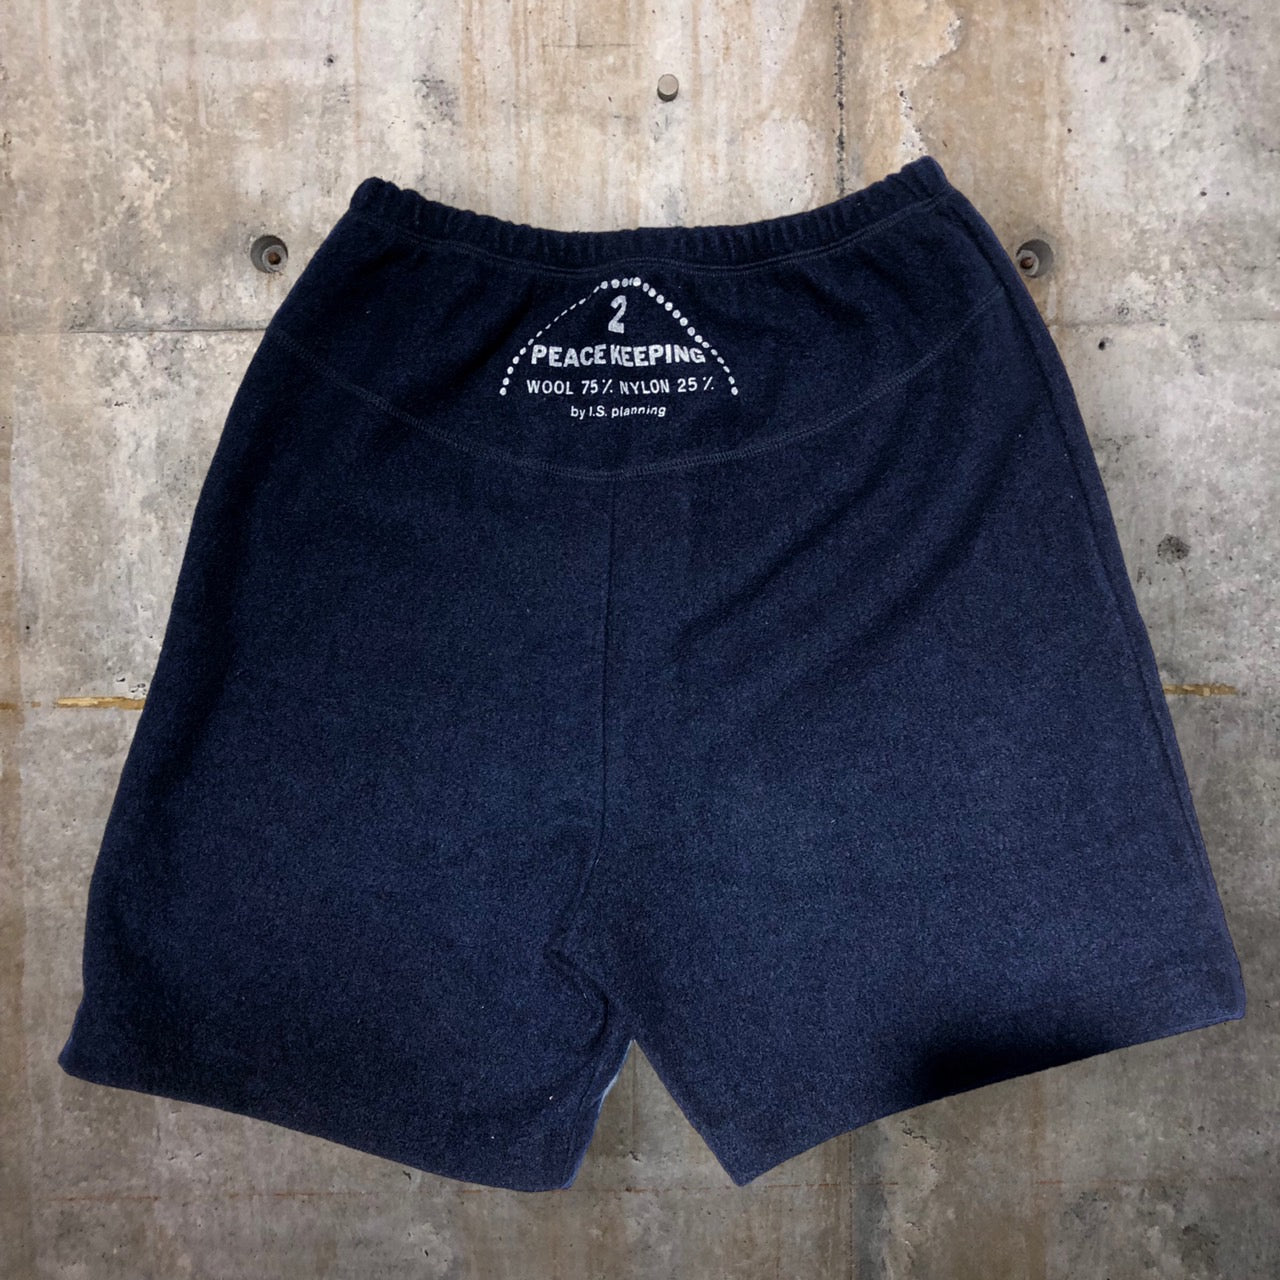 i.s. ISSEY MIYAKE(アイエス イッセイミヤケ) 90's back print wool short pants/ウールショートパンツ IS33-JF018 M ネイビー